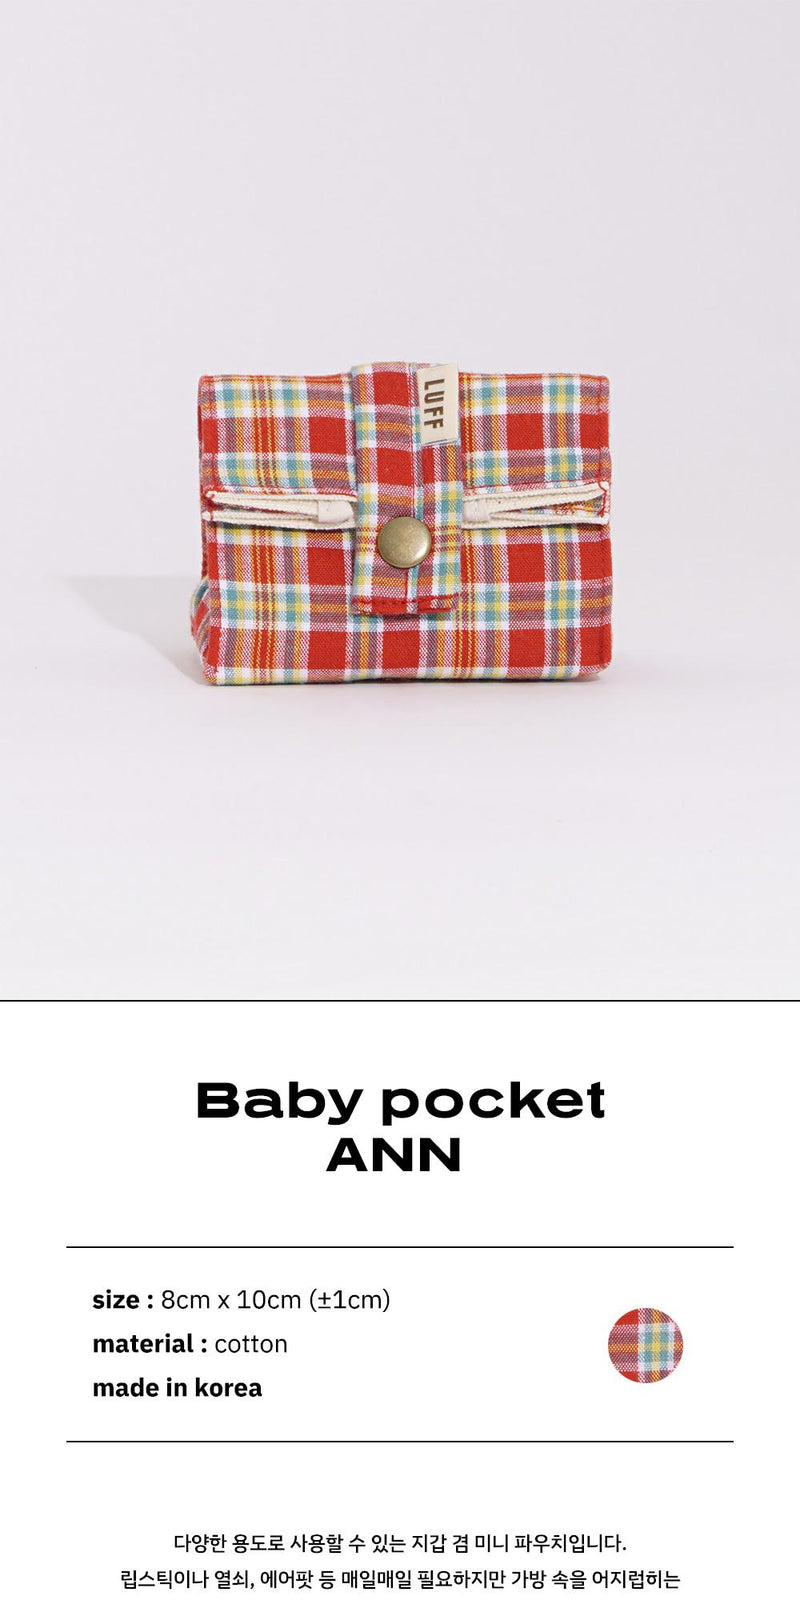 baby pocket - ann